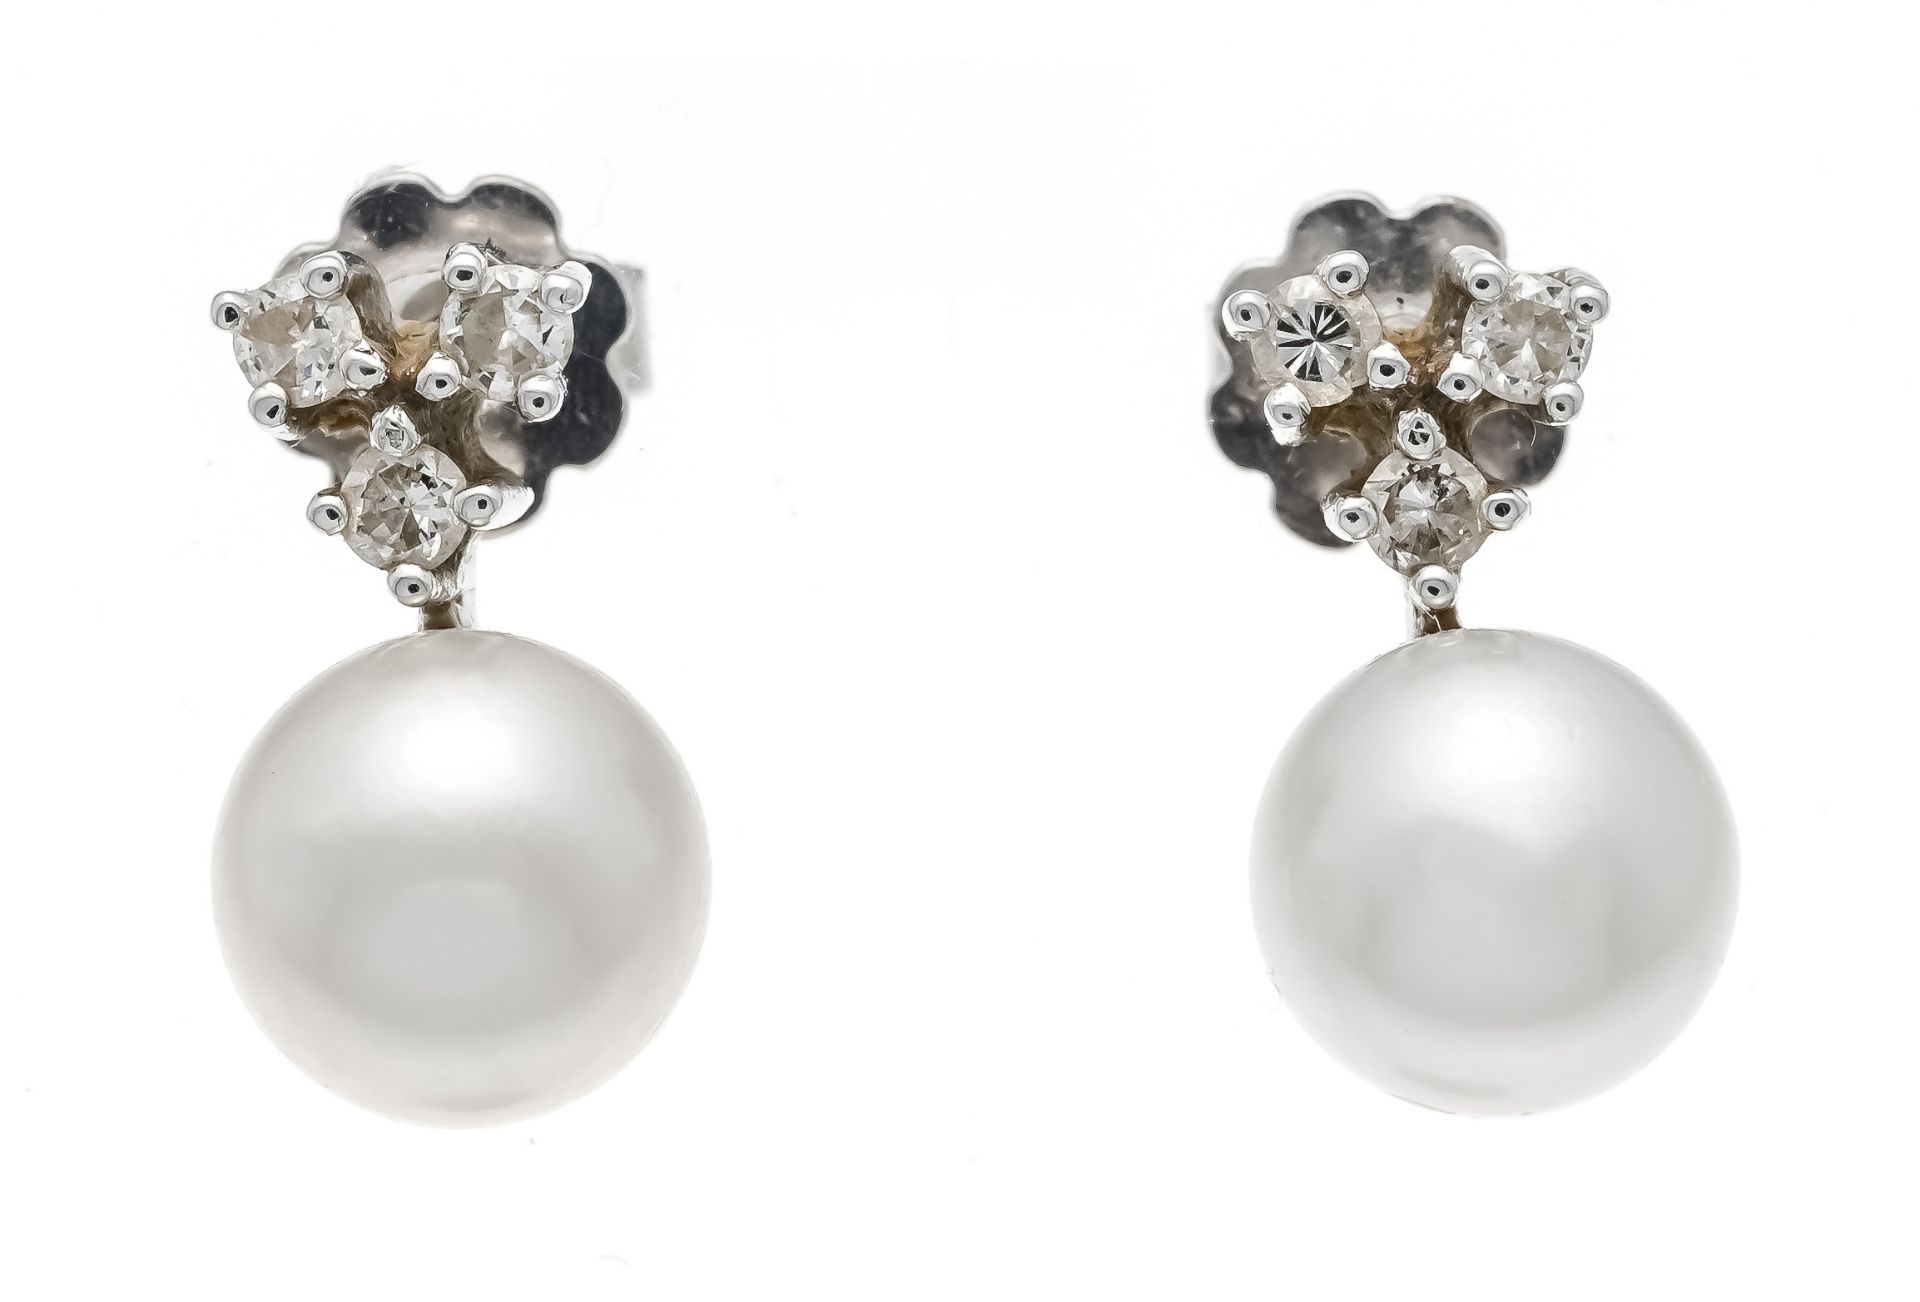 Akoya pearl stud earrings WG 585/000 with 2 creamy white Akoya pearls 8 mm and 6 brilliant-cut